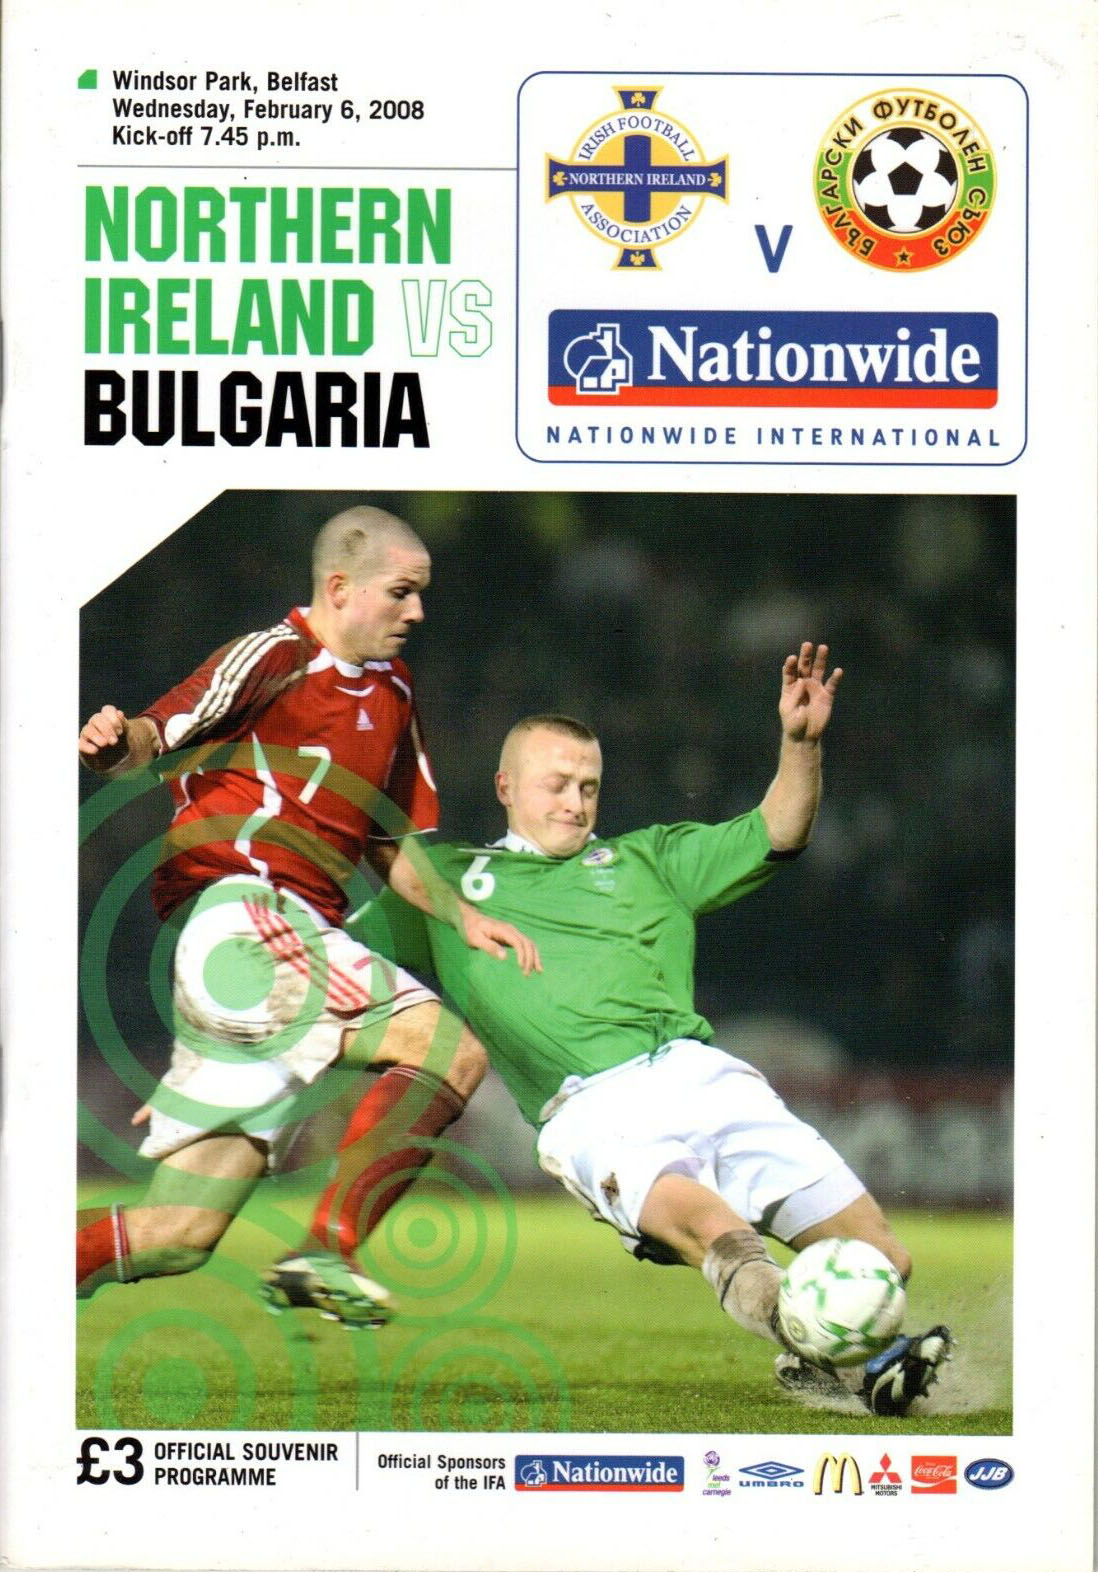 Northern Ireland vs. Bulgaria (February 6, 2008)